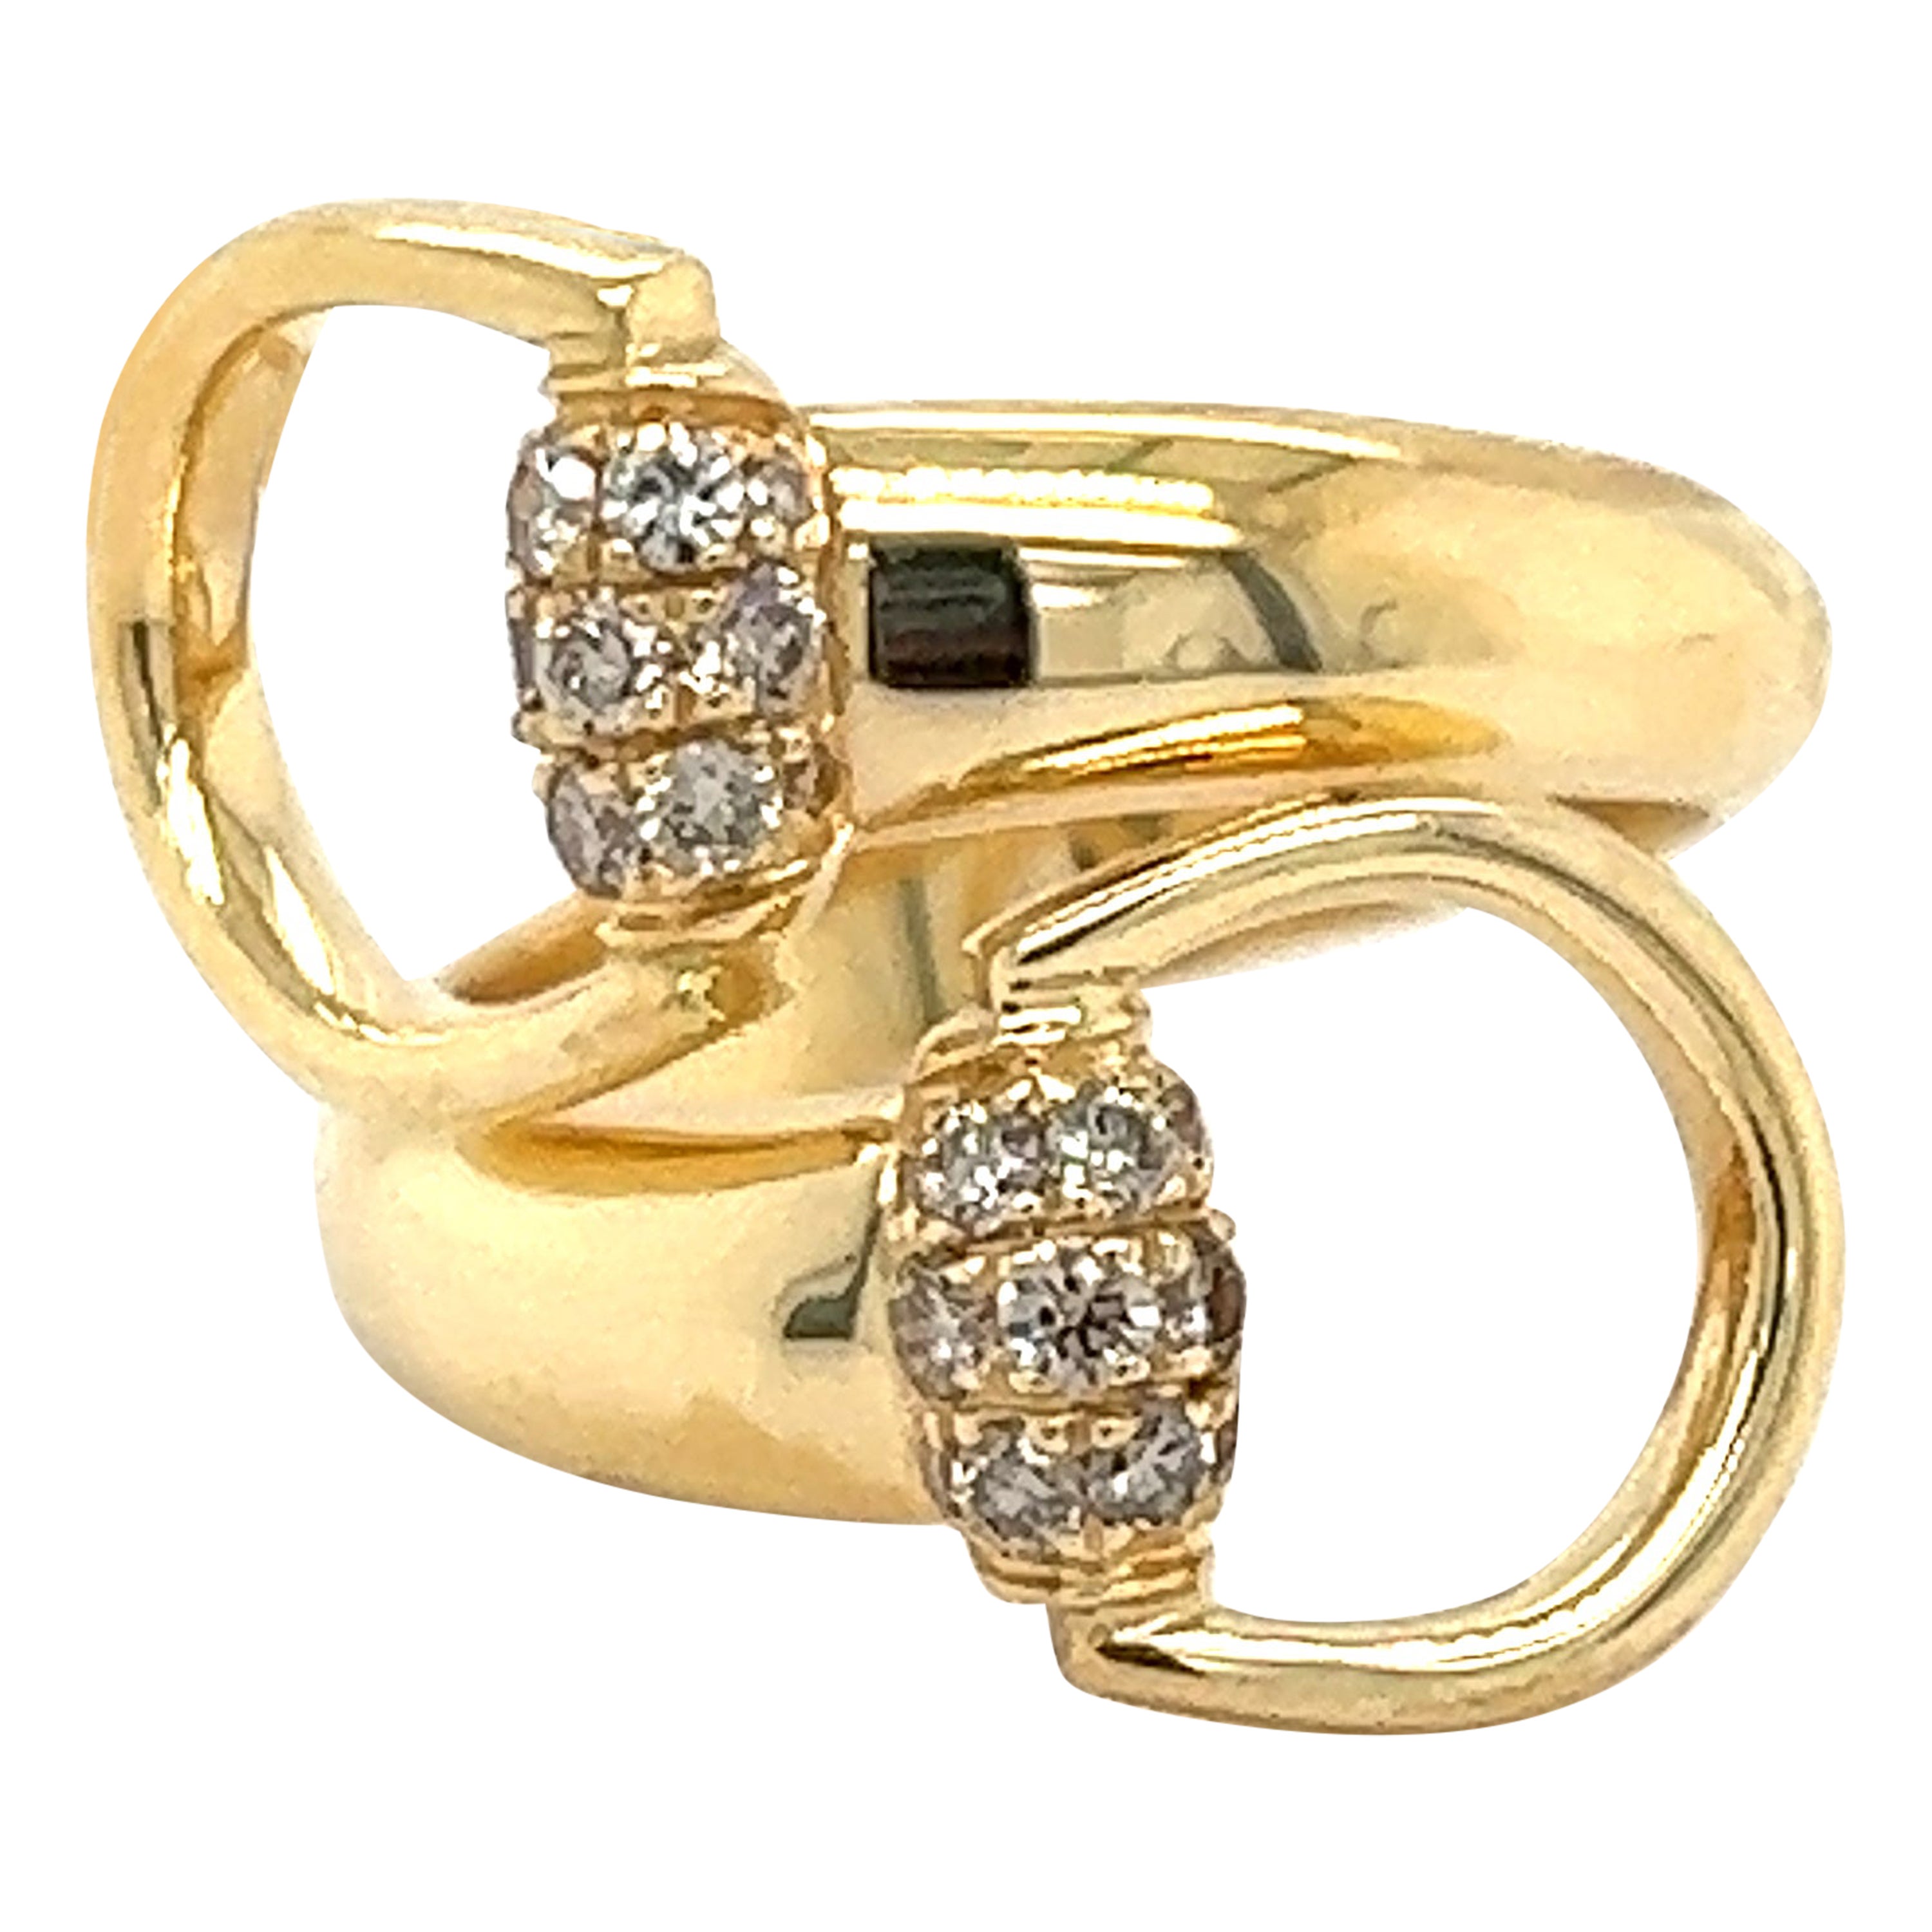 Gucci Horsebit Diamond Ring 18k Yellow Gold Size 7